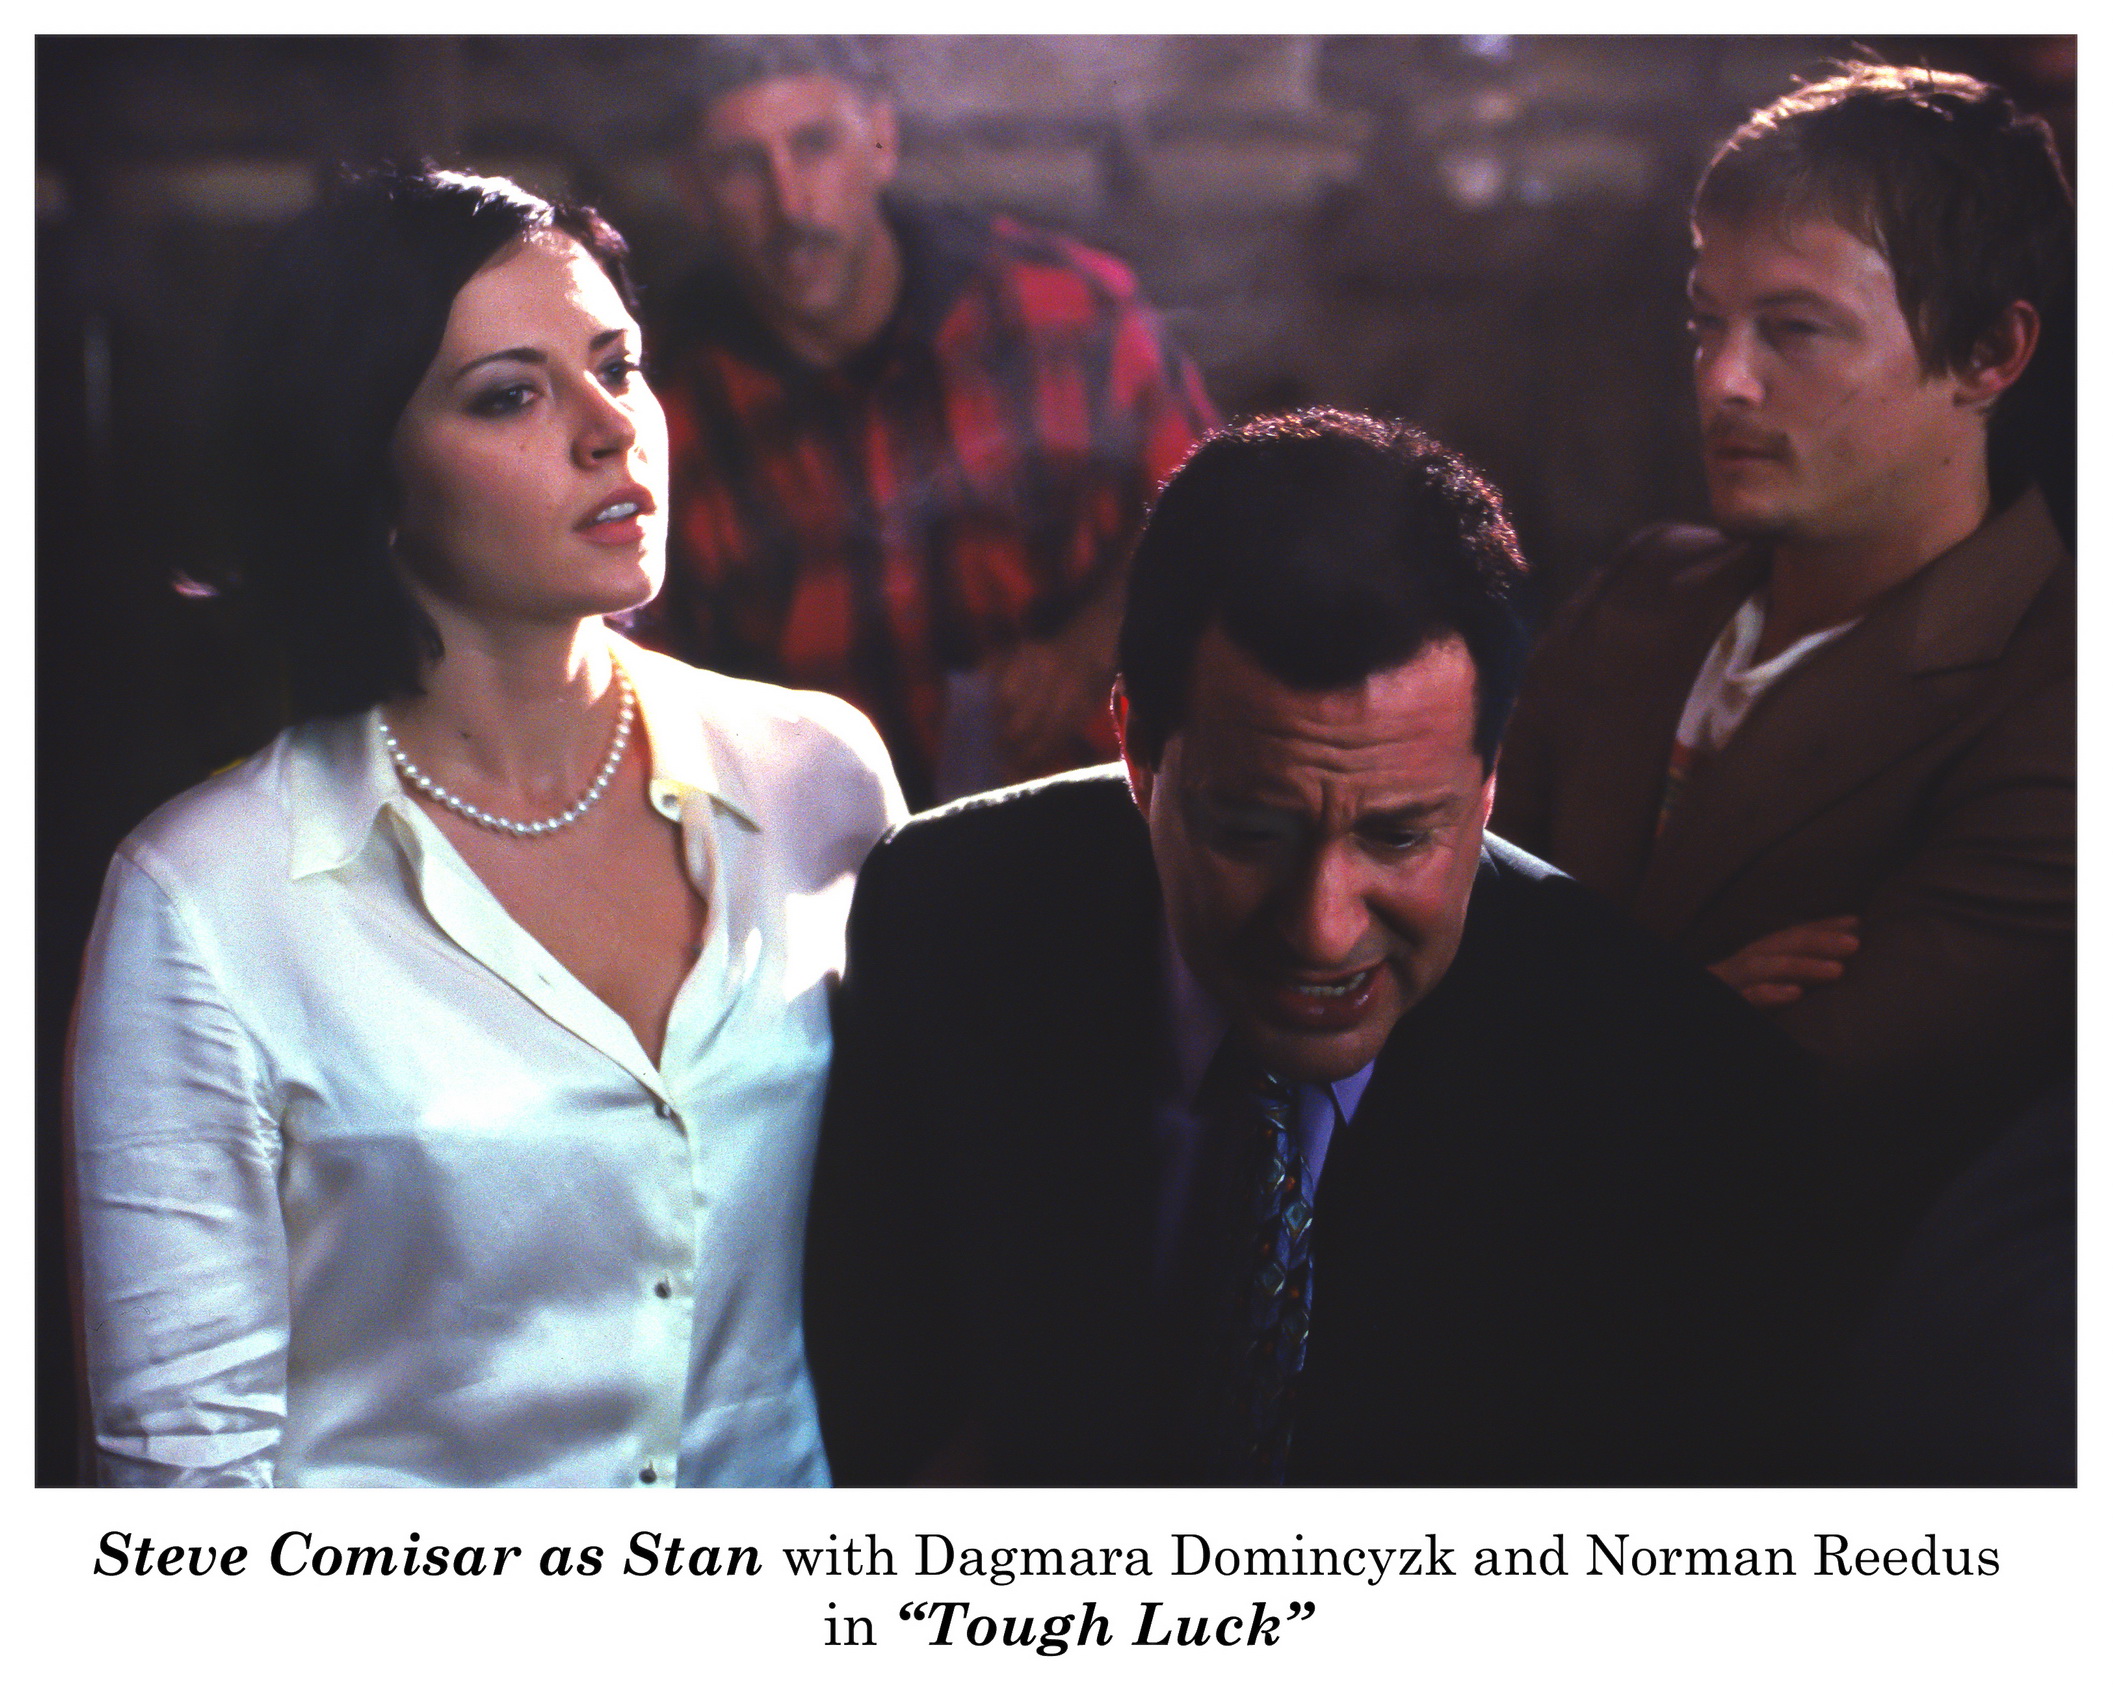 Dagmara Dominczyk, Steve Comisar, Norman Reedus on the set of Tough Luck